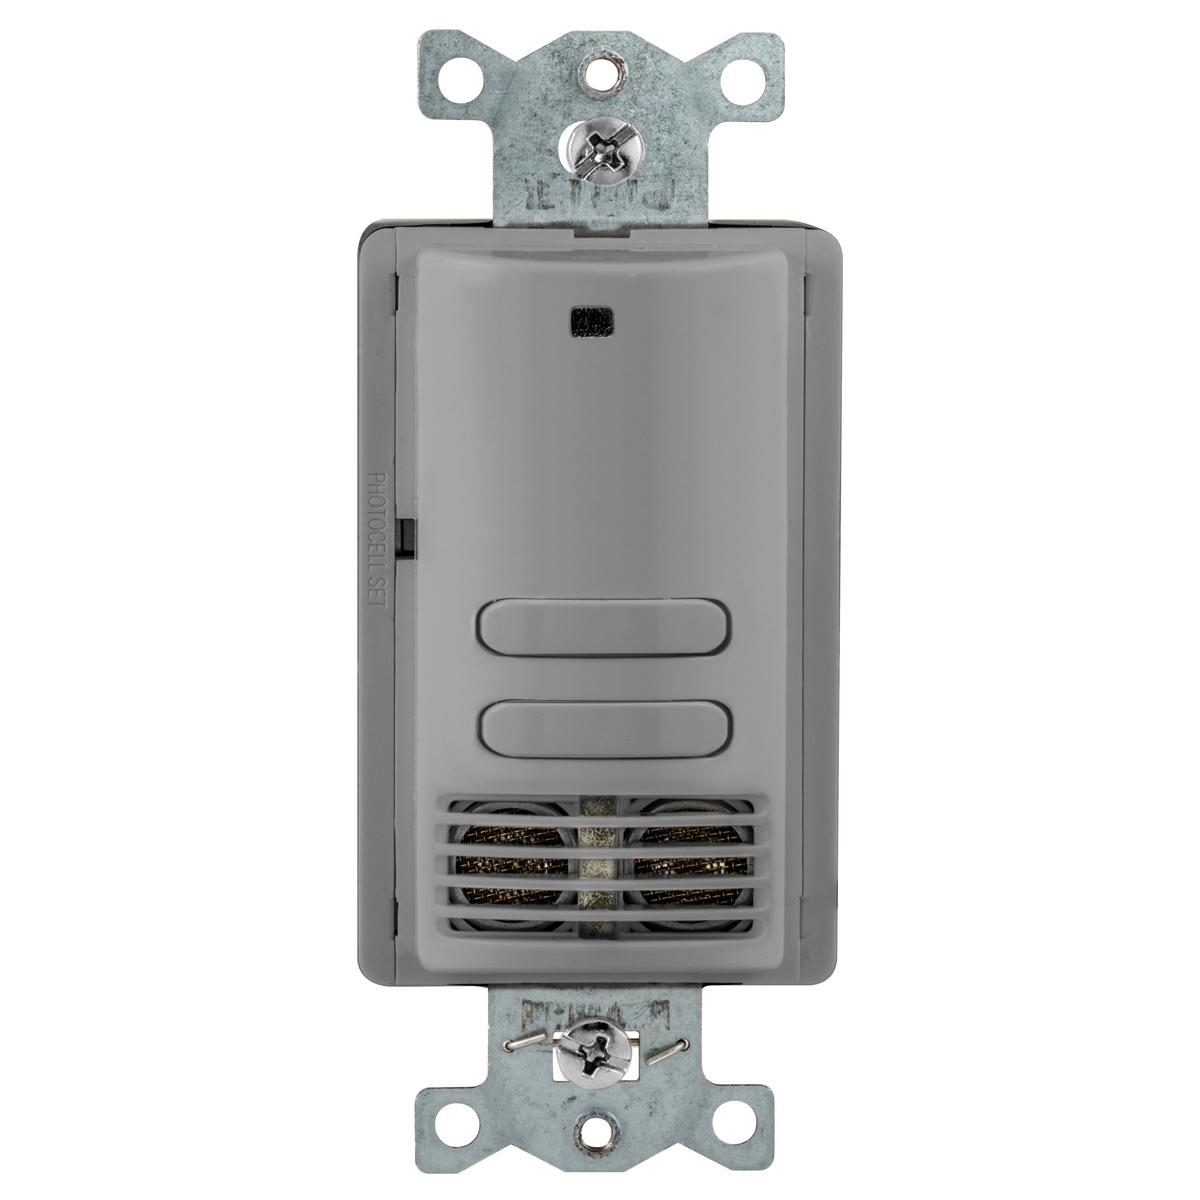 Hubbell AU2000GY22 Occupancy/Vacancy Sensors, Wall Switch,Adaptive Ultrasonic, 2 Circuit, 120/277V AC, Gray 